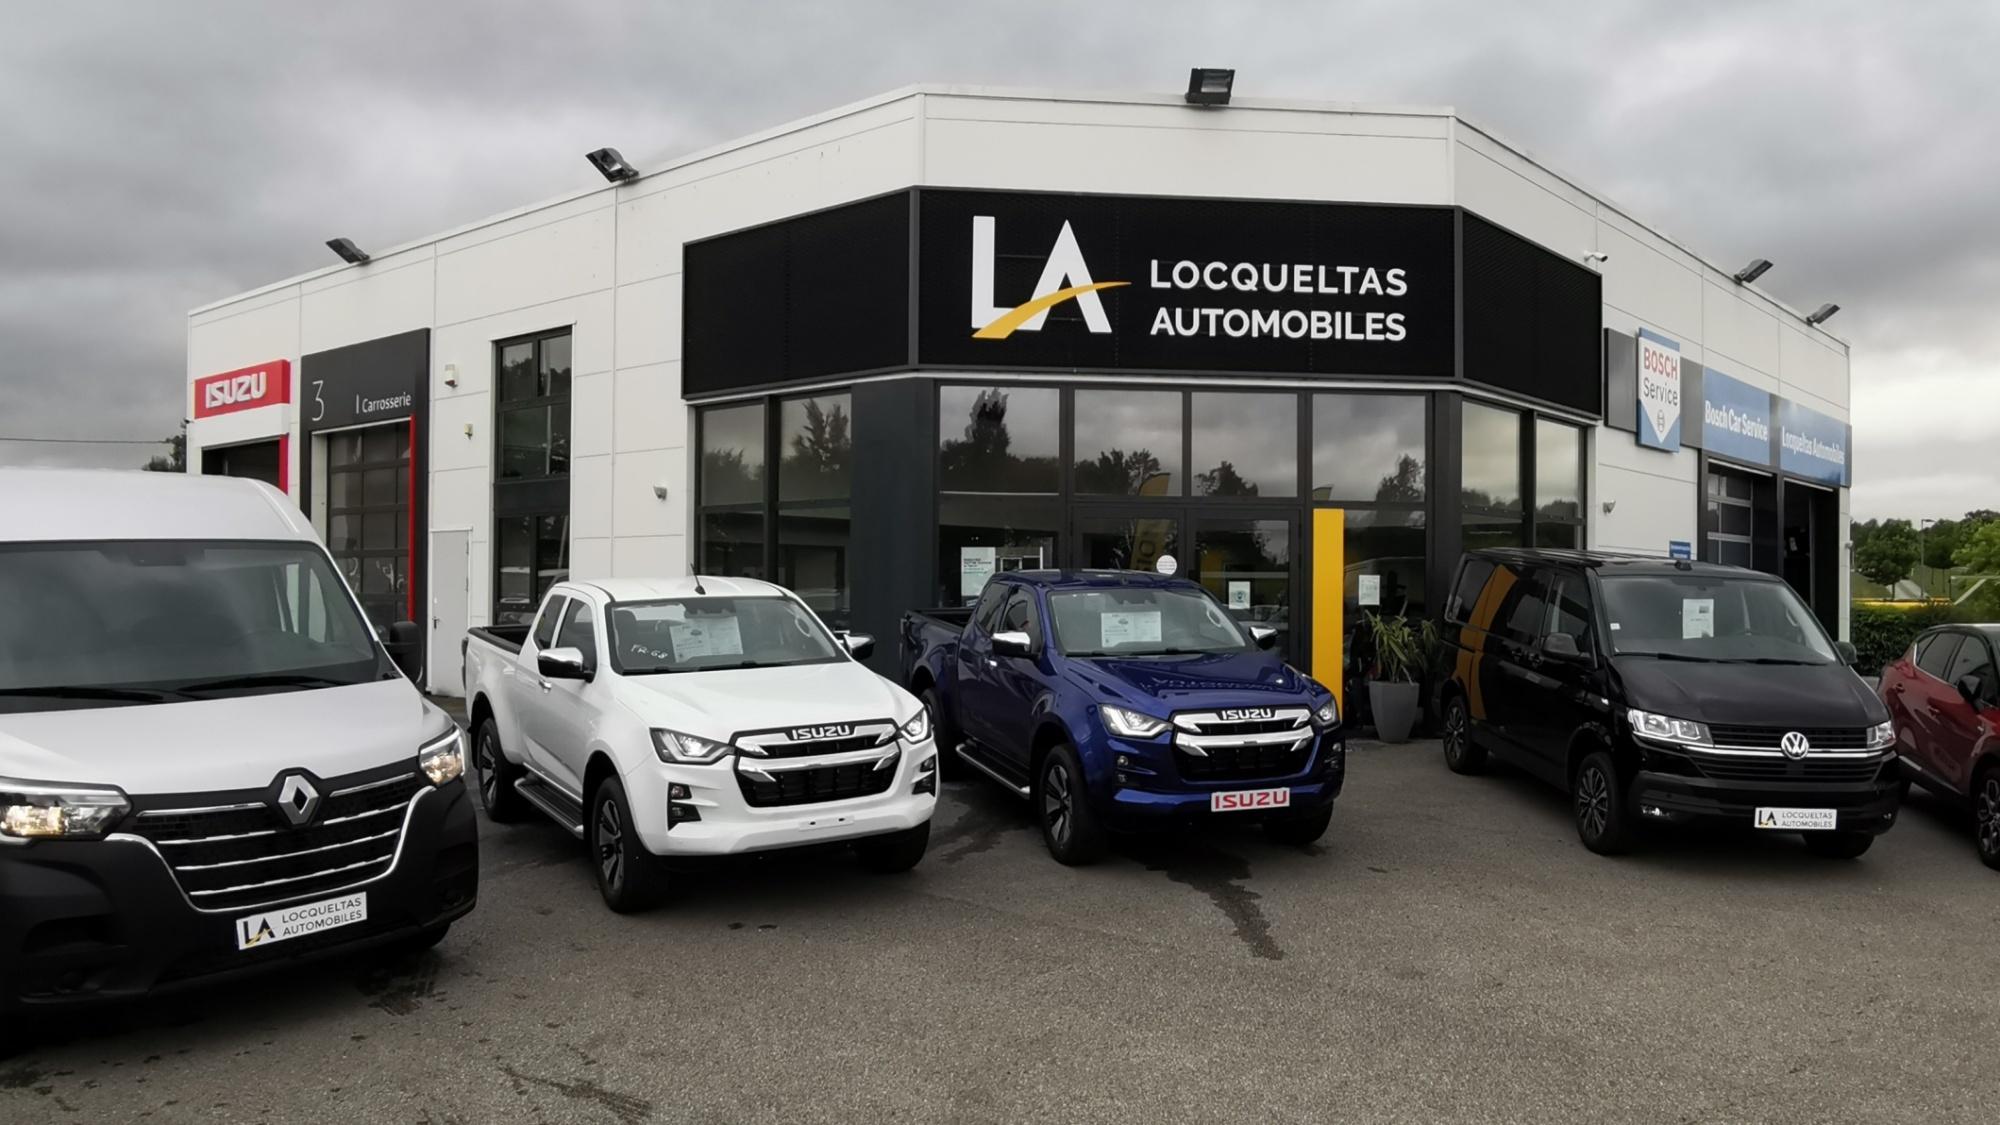 Locqueltas Automobiles -  Bosch Car Service Locqueltas